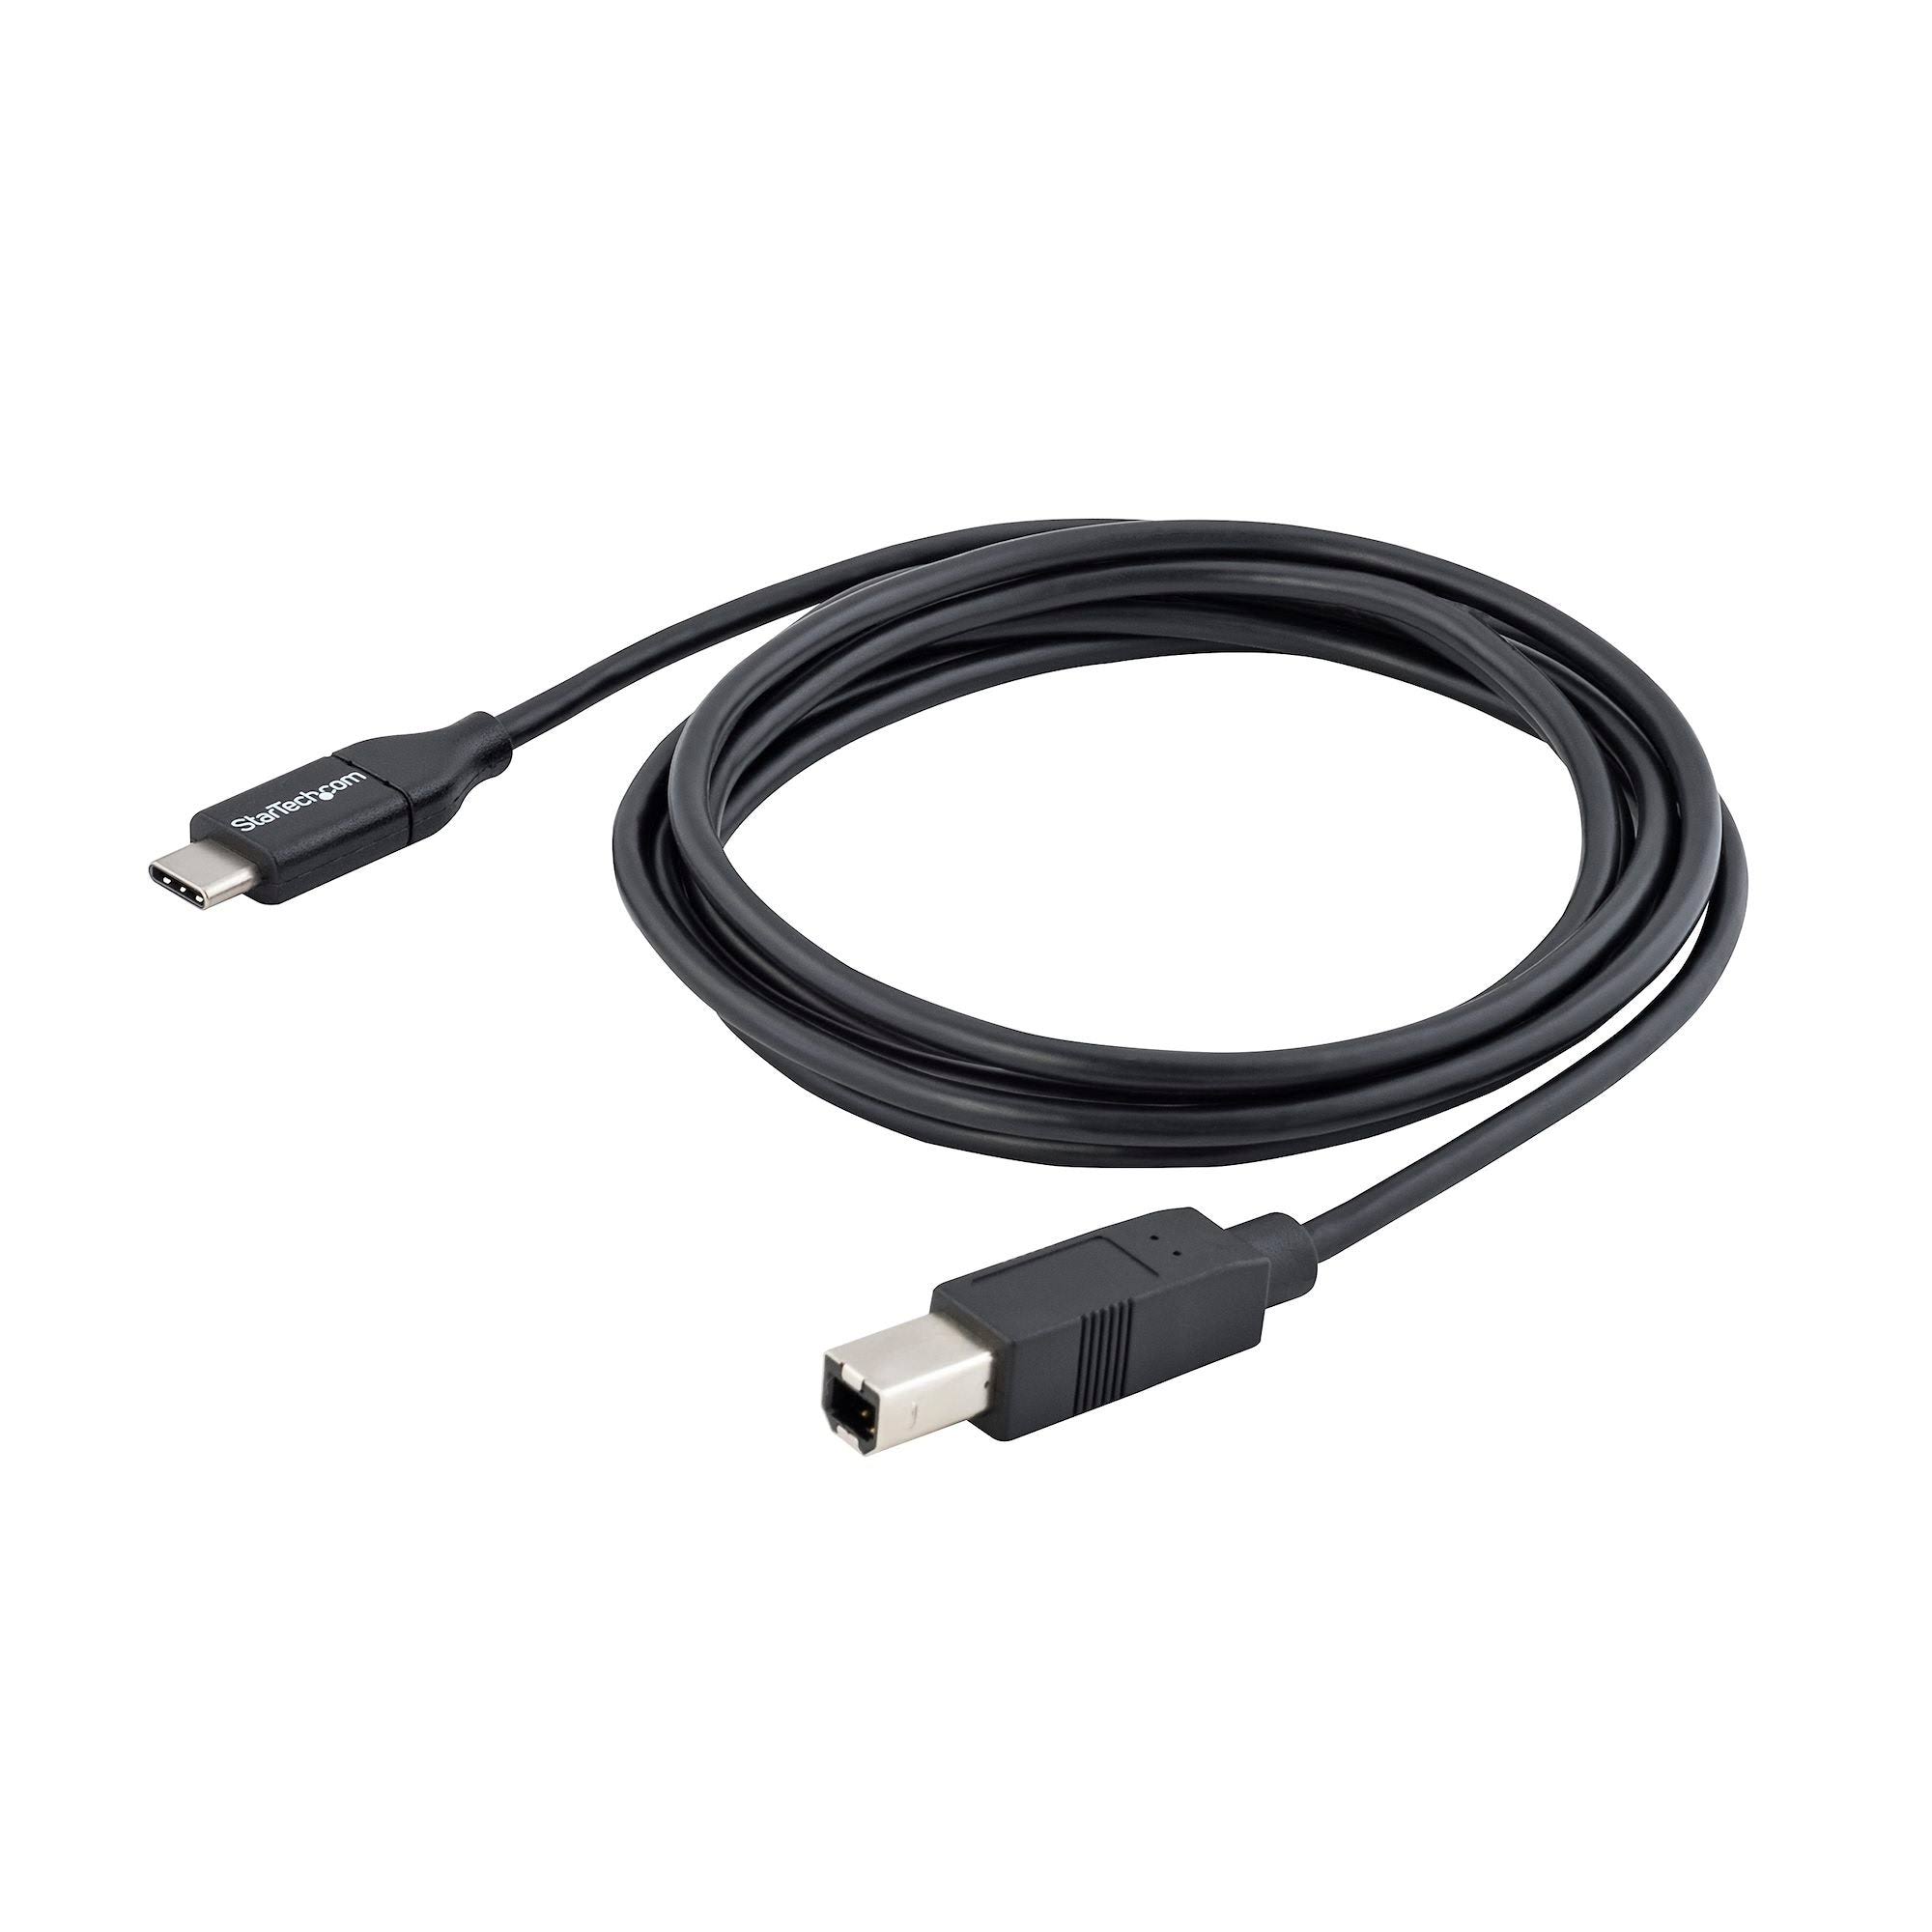 StarTech.com 2m 6ft USB C to USB B Cable - USB 2.0 (USB2CB2M)